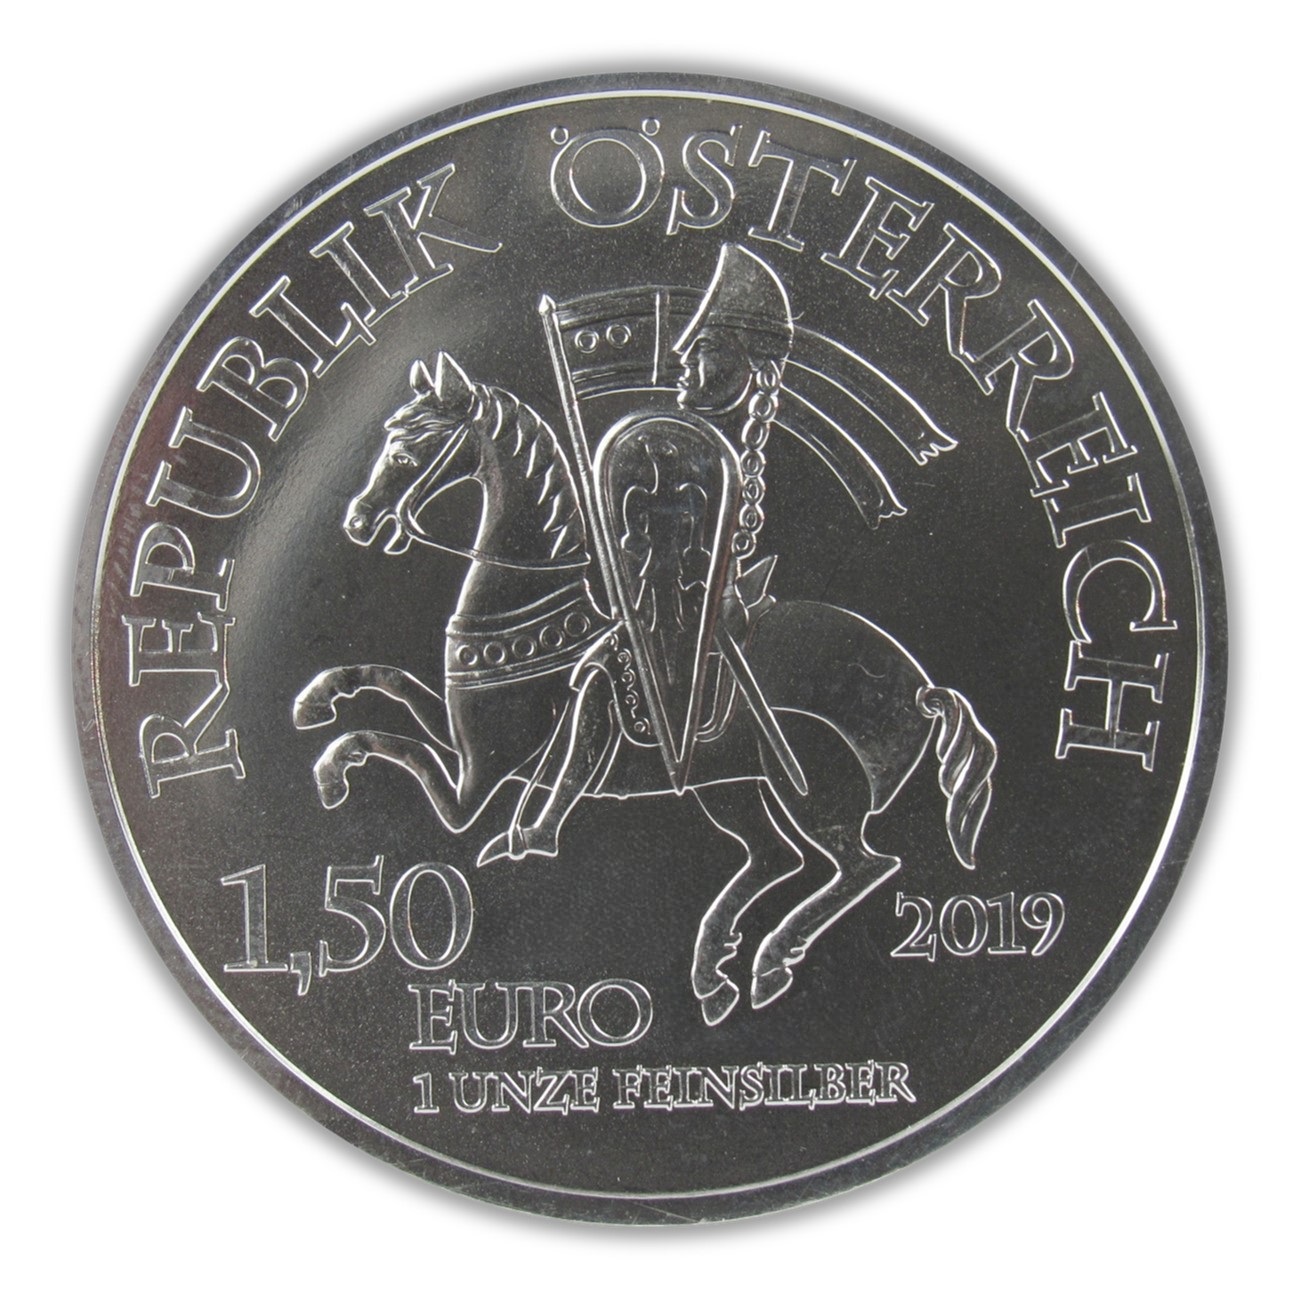 Austrian Mint Robin Hood 1 oz Silver Coin